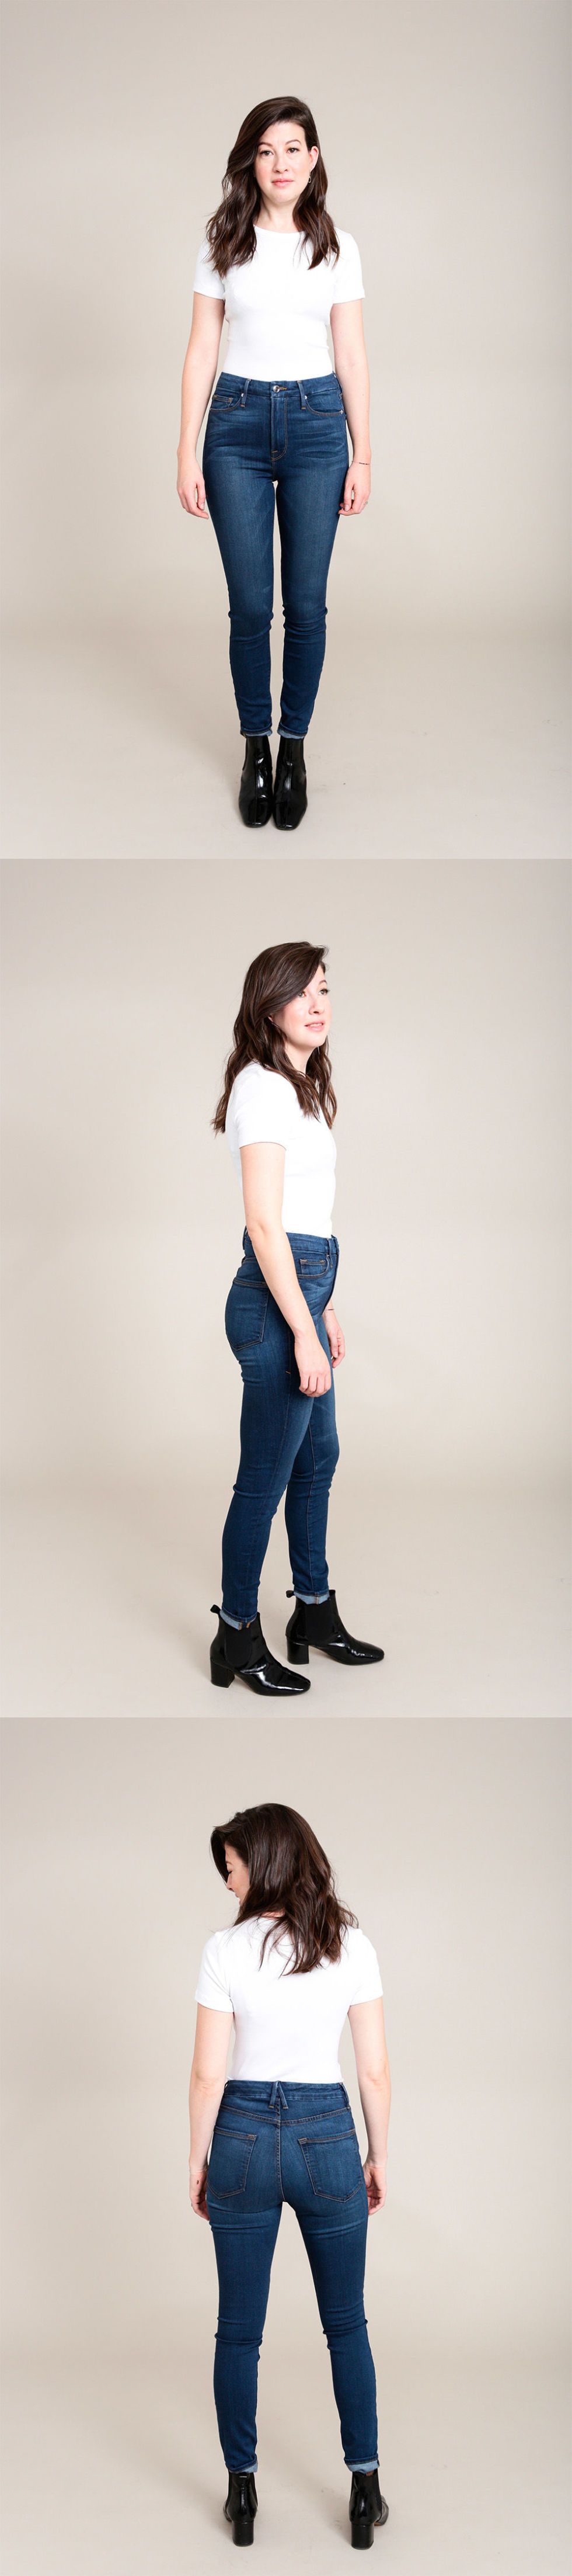 size 4 jeans waist